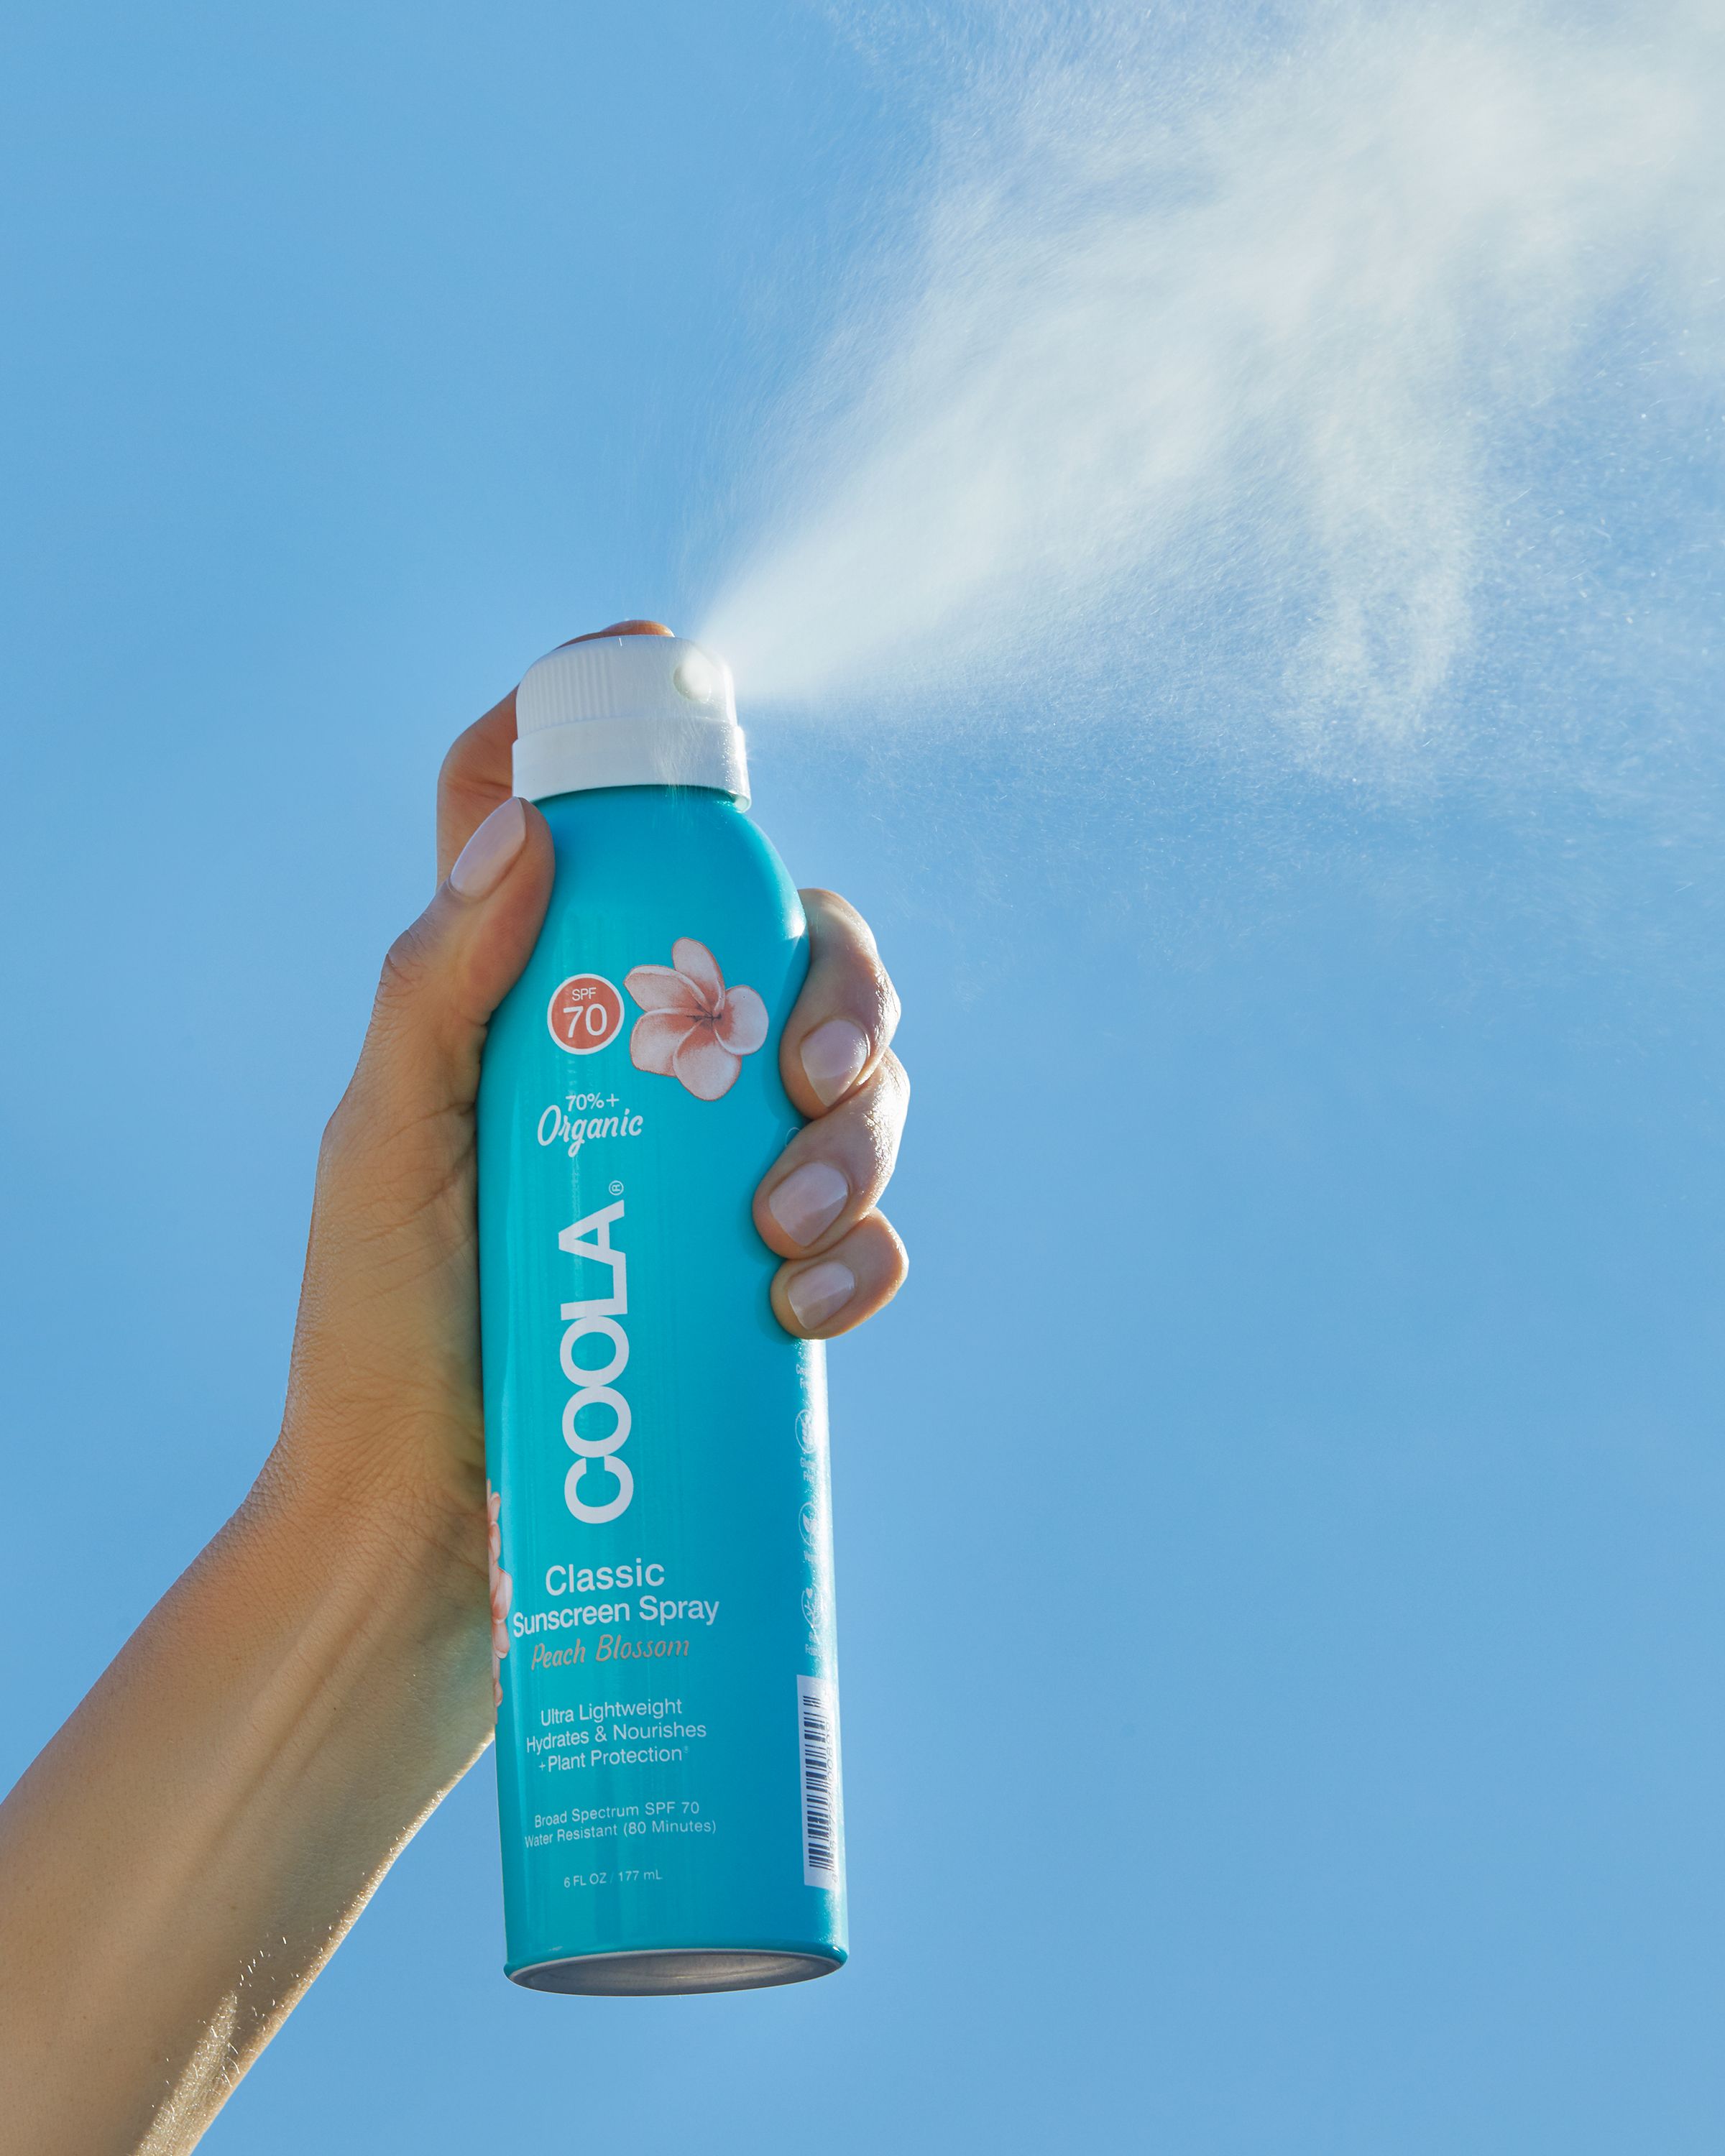 COOLA Classic Body Organic Sunscreen Spray, Peach Blossom, SPF 70 - 6 fl oz